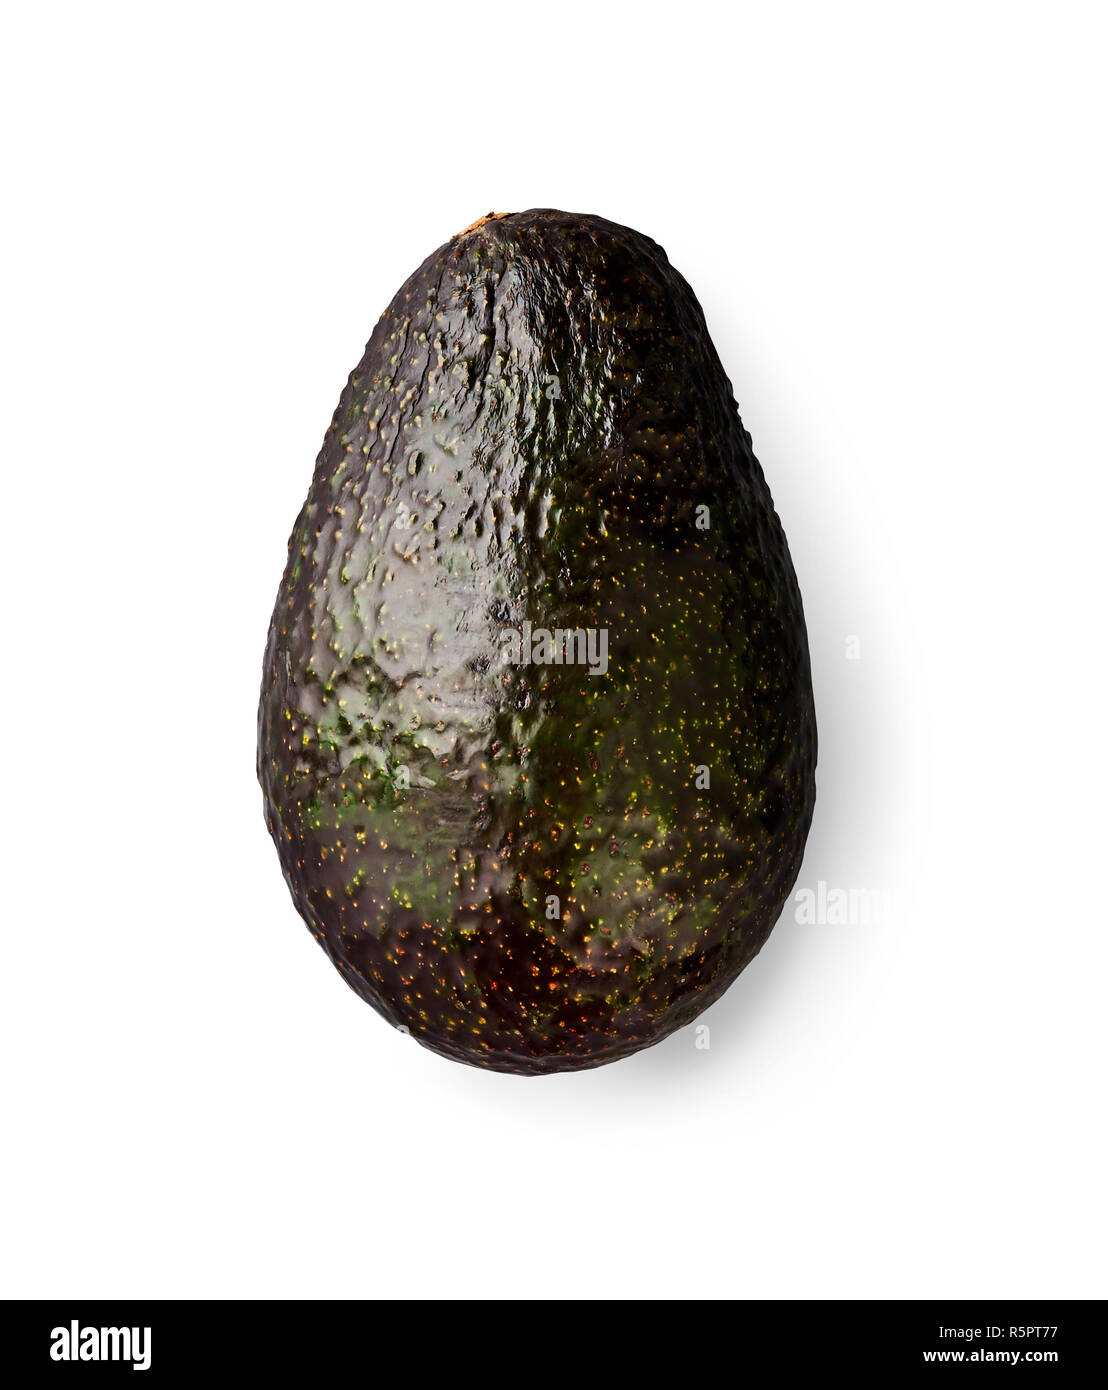 Ripe avocado isolated on white background. Top view of dark green soft avocado. Stock Photo